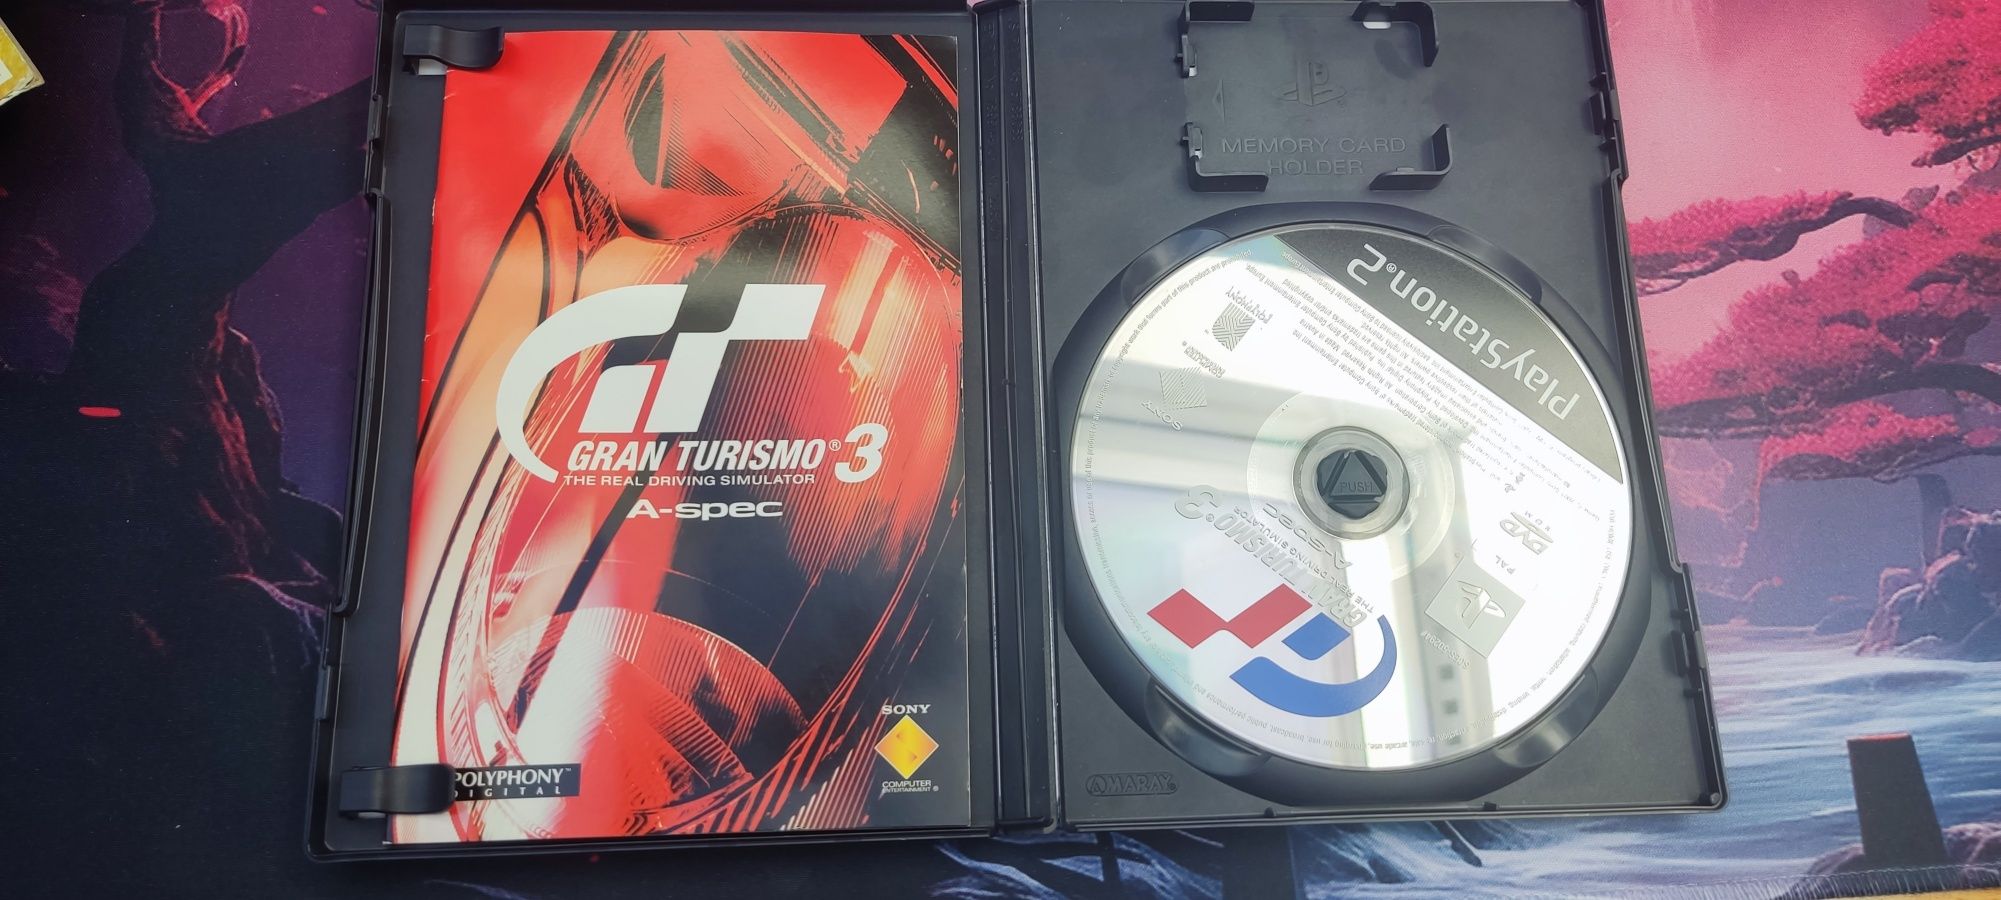 Gran Turismo 3 A-Spec PAL PS2 Igła